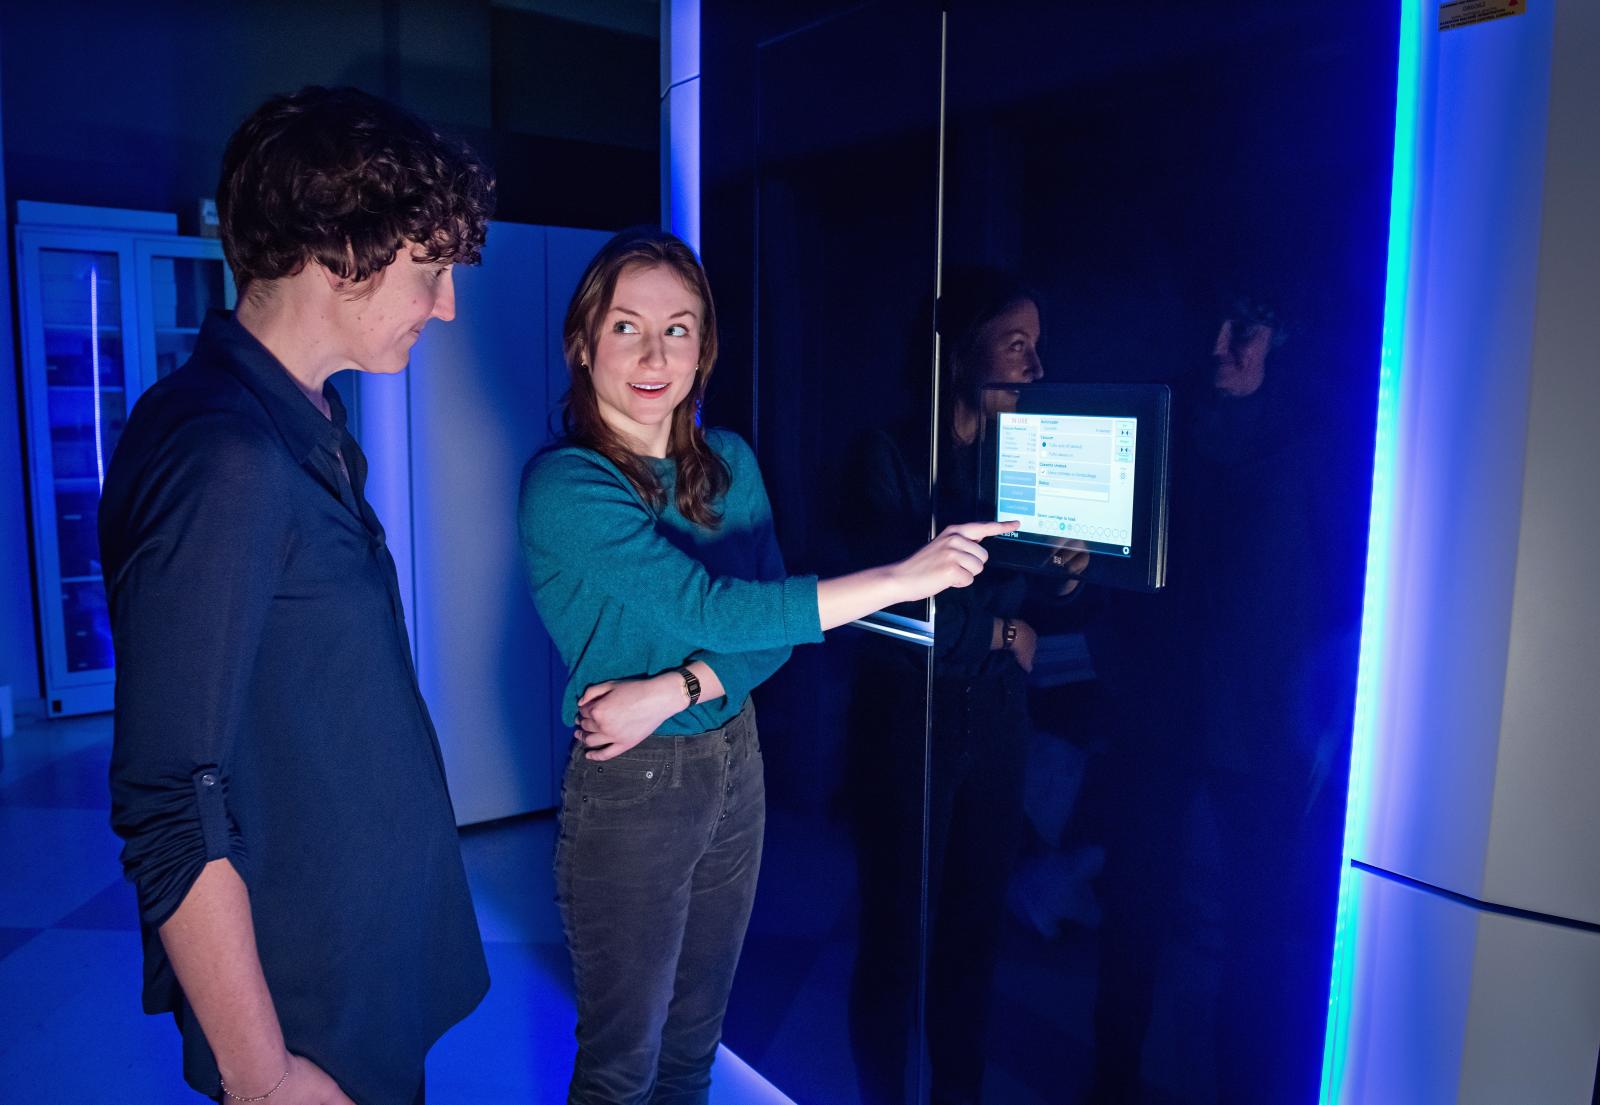 Melanie Ohi, Ph.D., and Jacquelyn Roberts examine the Titan Krios microscope